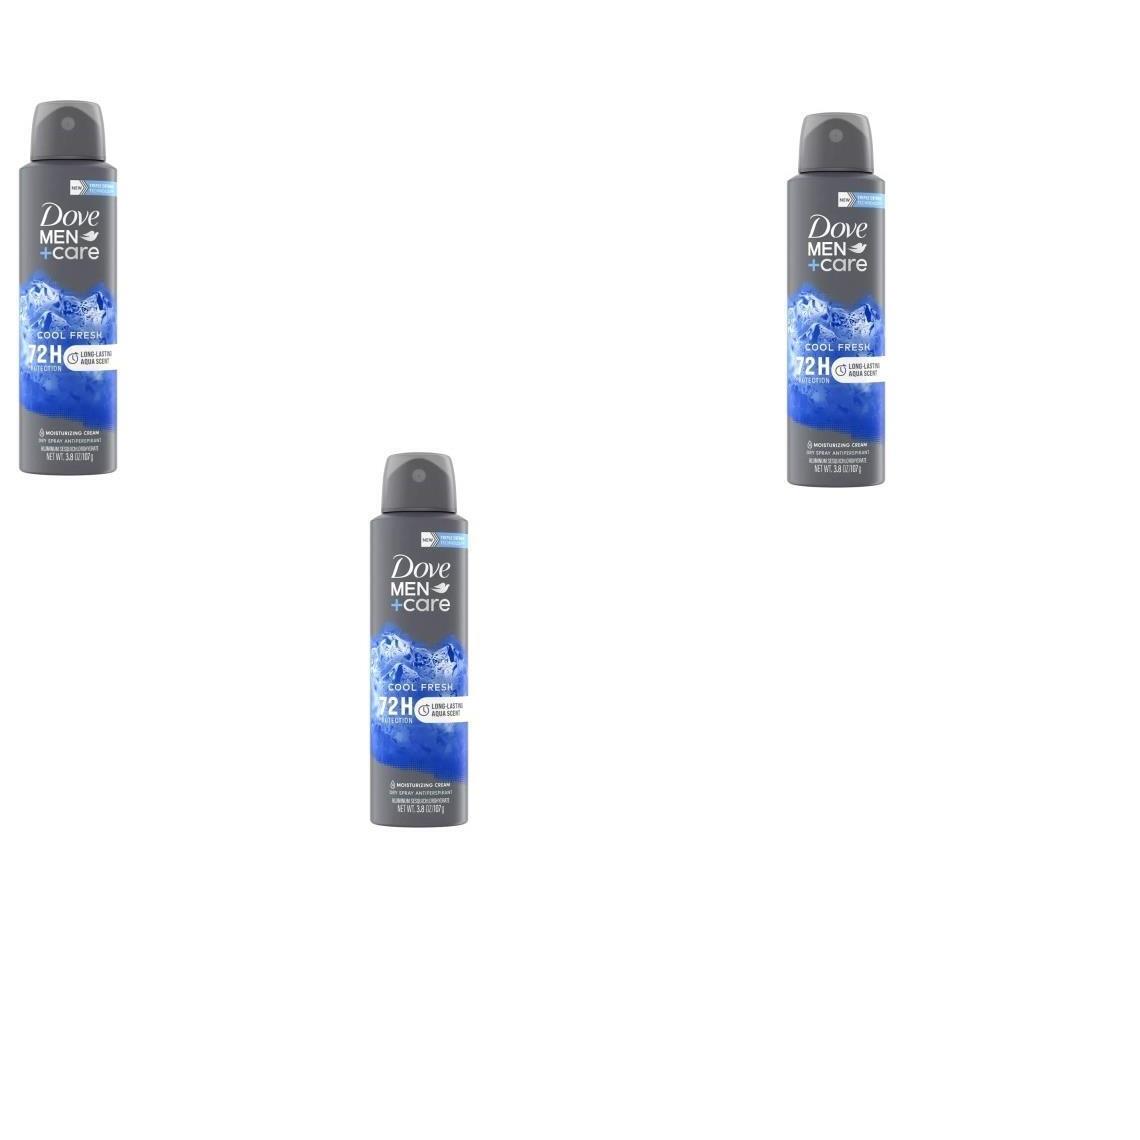 BL Dove Deodorant 3.8oz Each Mens Dry Spray Cool Fresh Three Pack